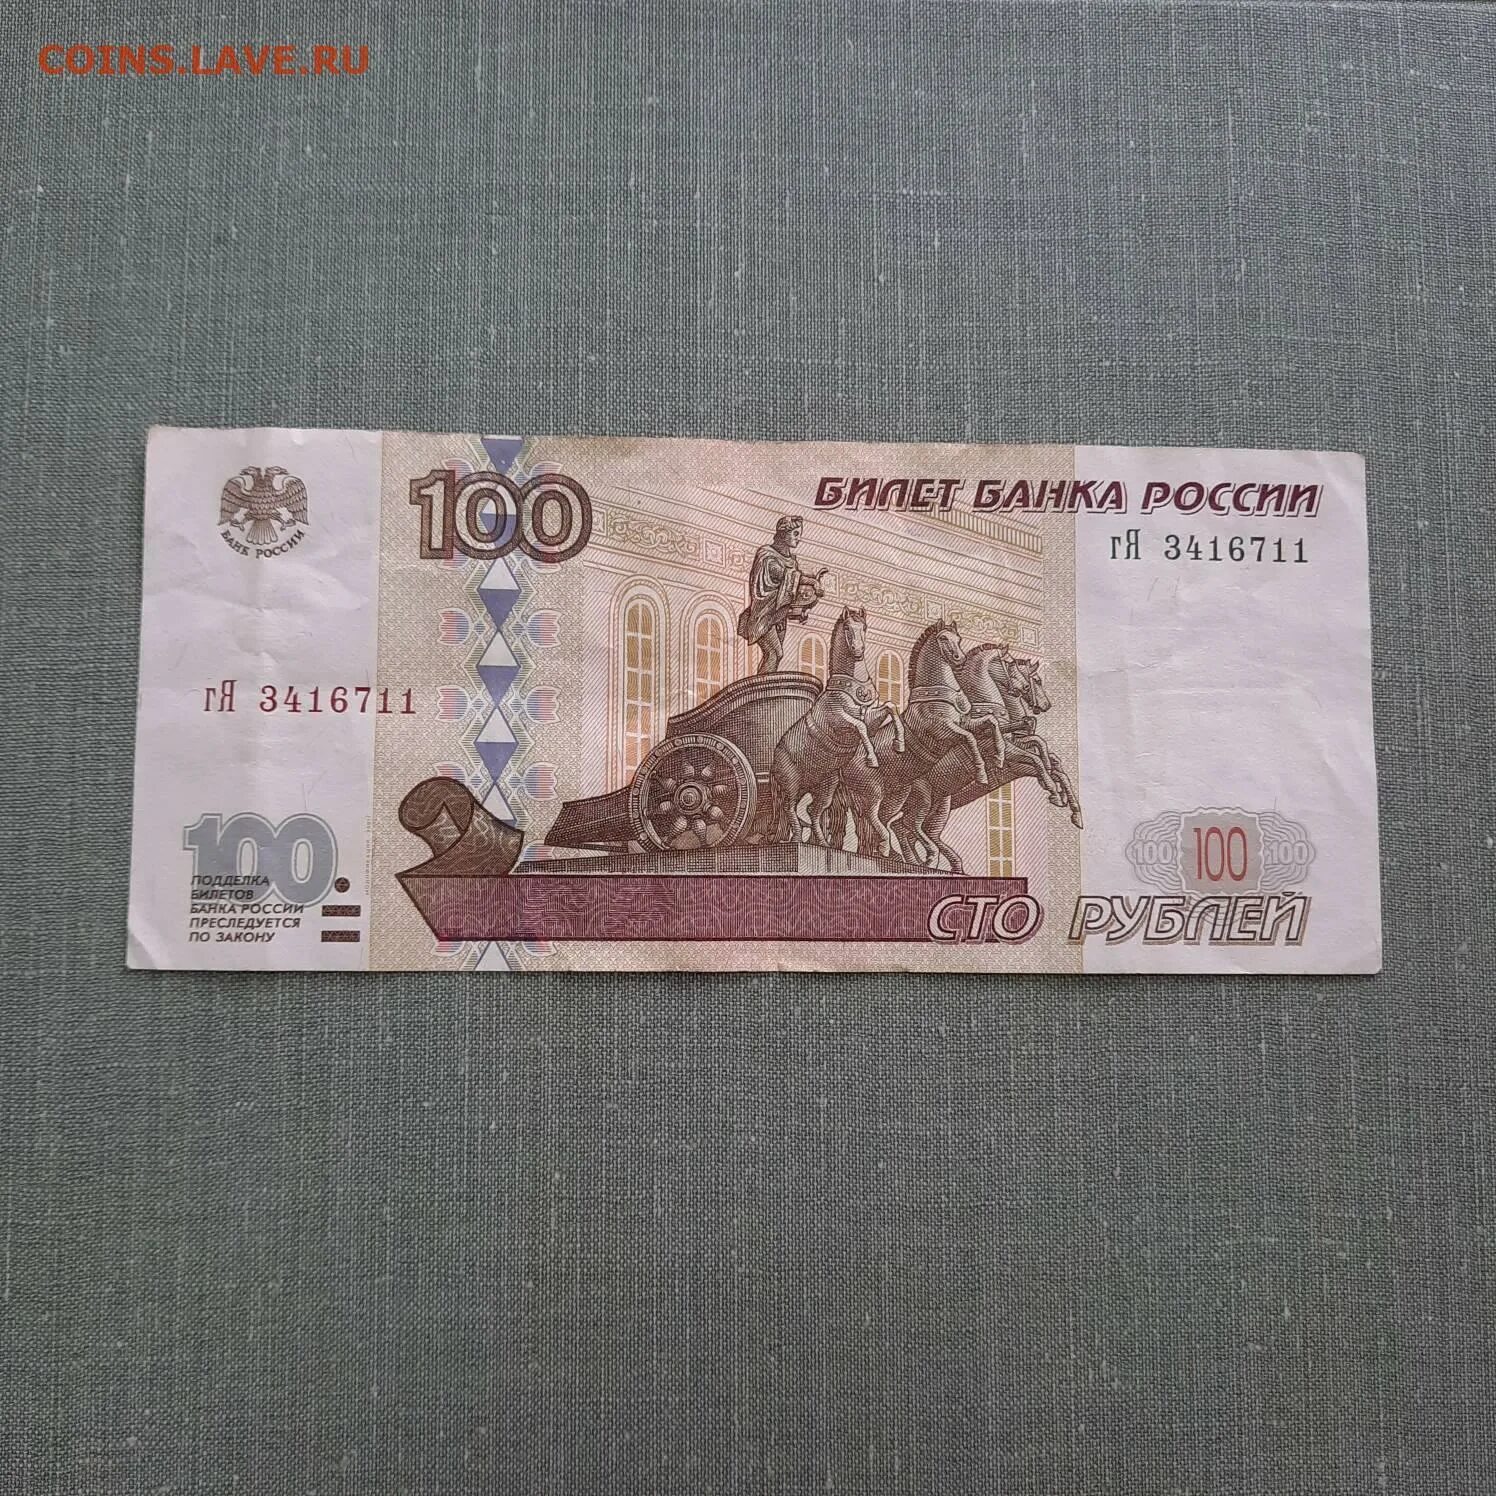 36 500 рублей. СТО рублей модификация 2001. 100 Рублей модификация 2001. 100 Рублей 1997. 10 Рублей модификация 2001.